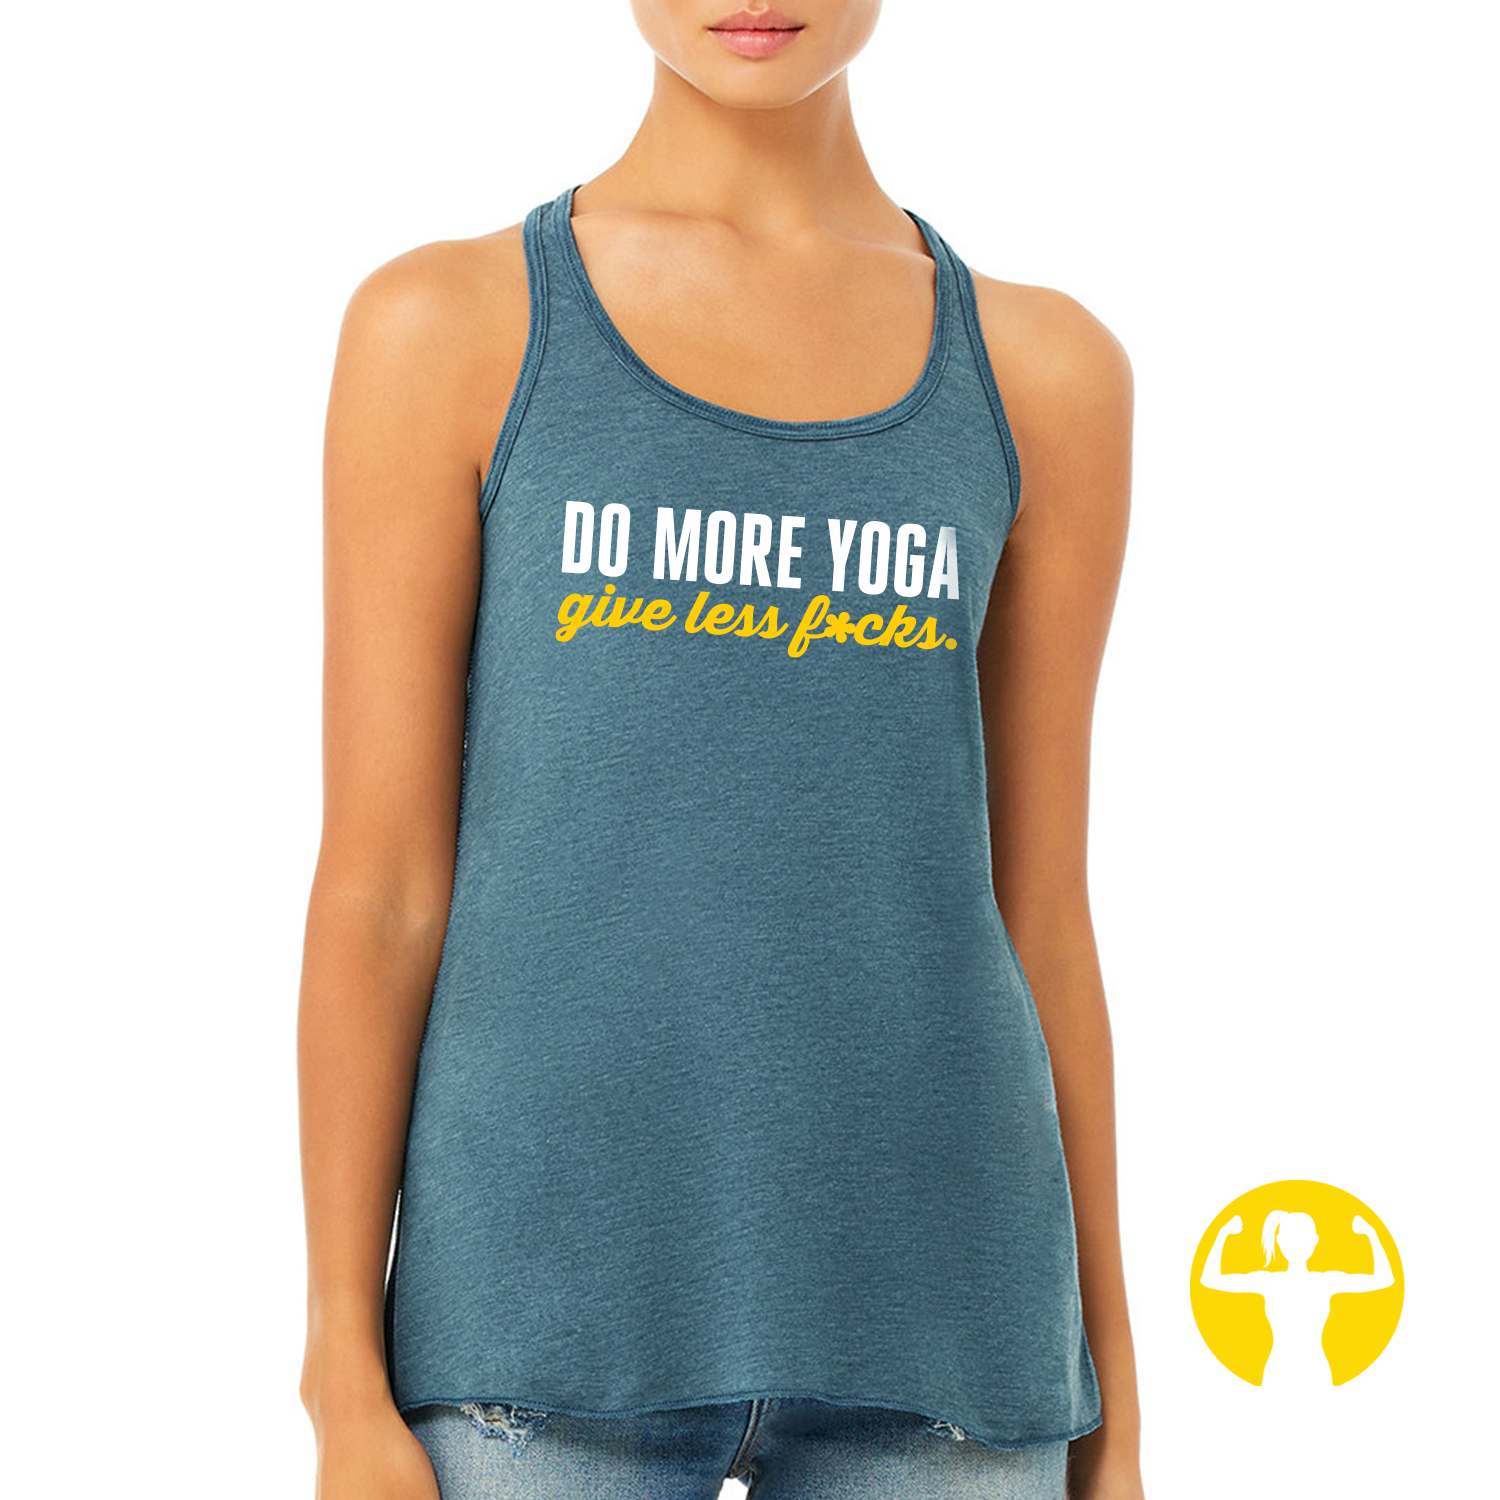 Funny Yoga Shirts